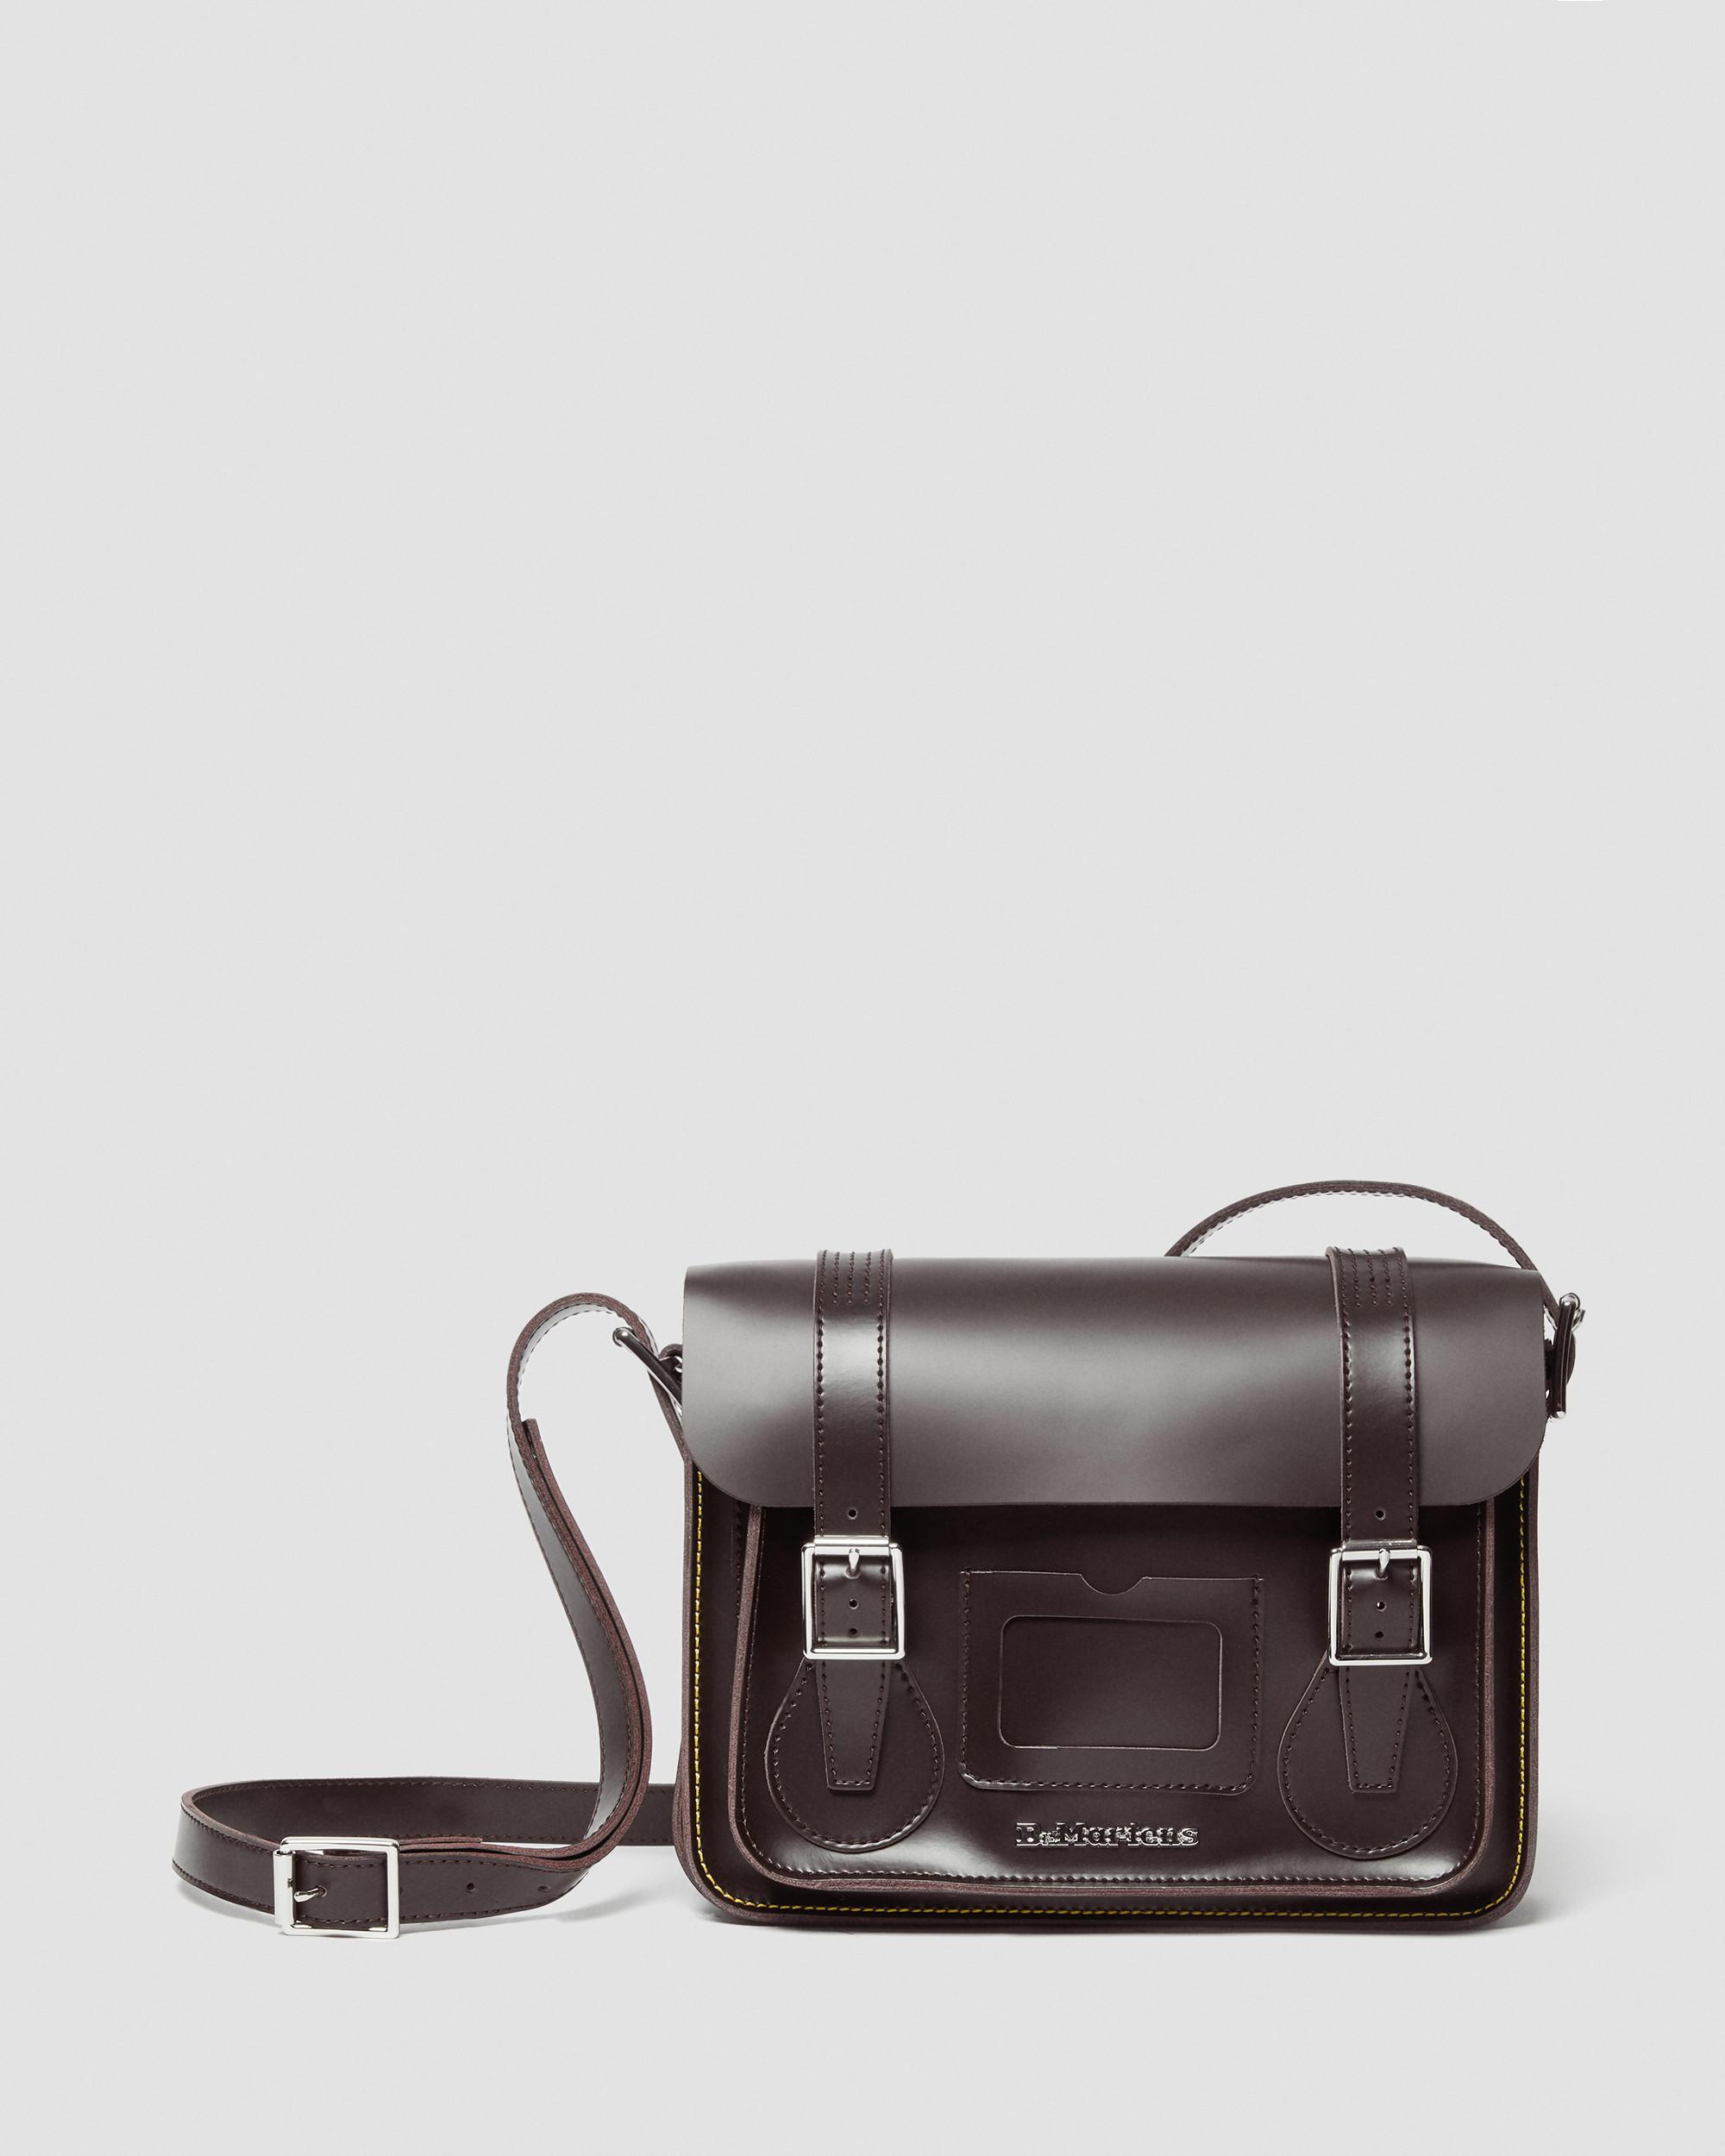 11 inch Leather Messenger Bag in Black